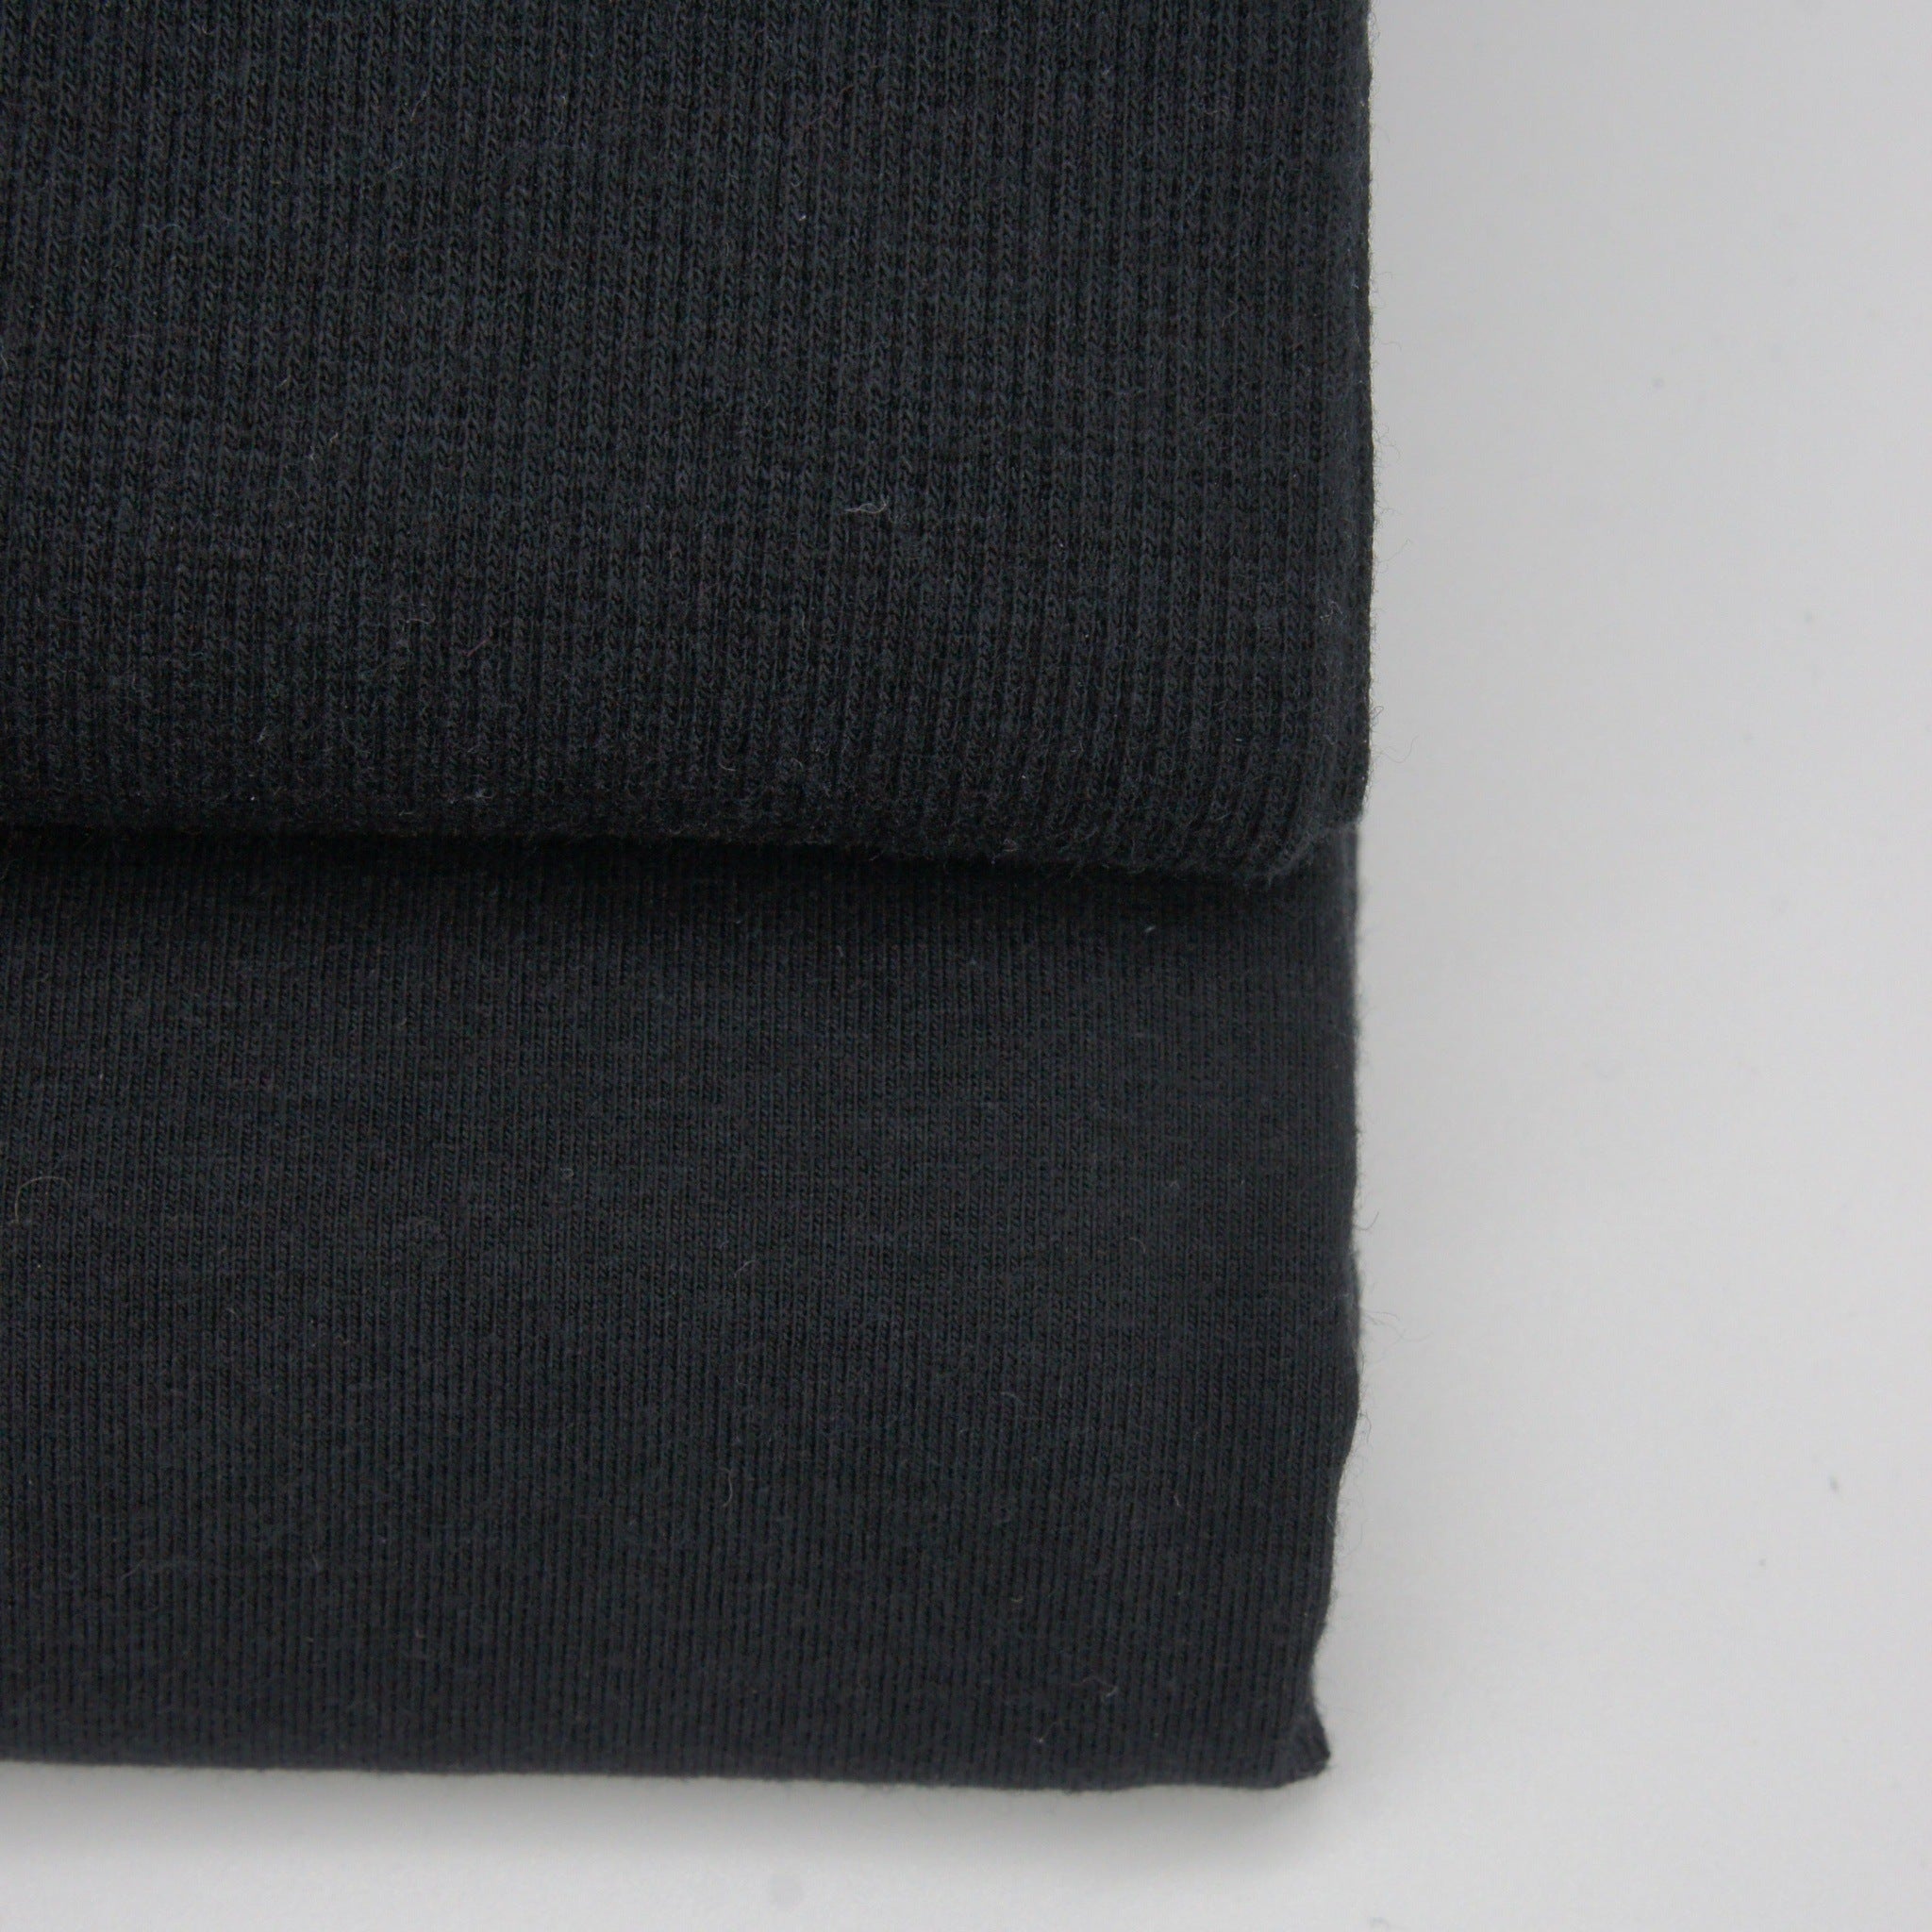 Tencel Organic Cotton Spandex 2x2 Rib Knit - Black